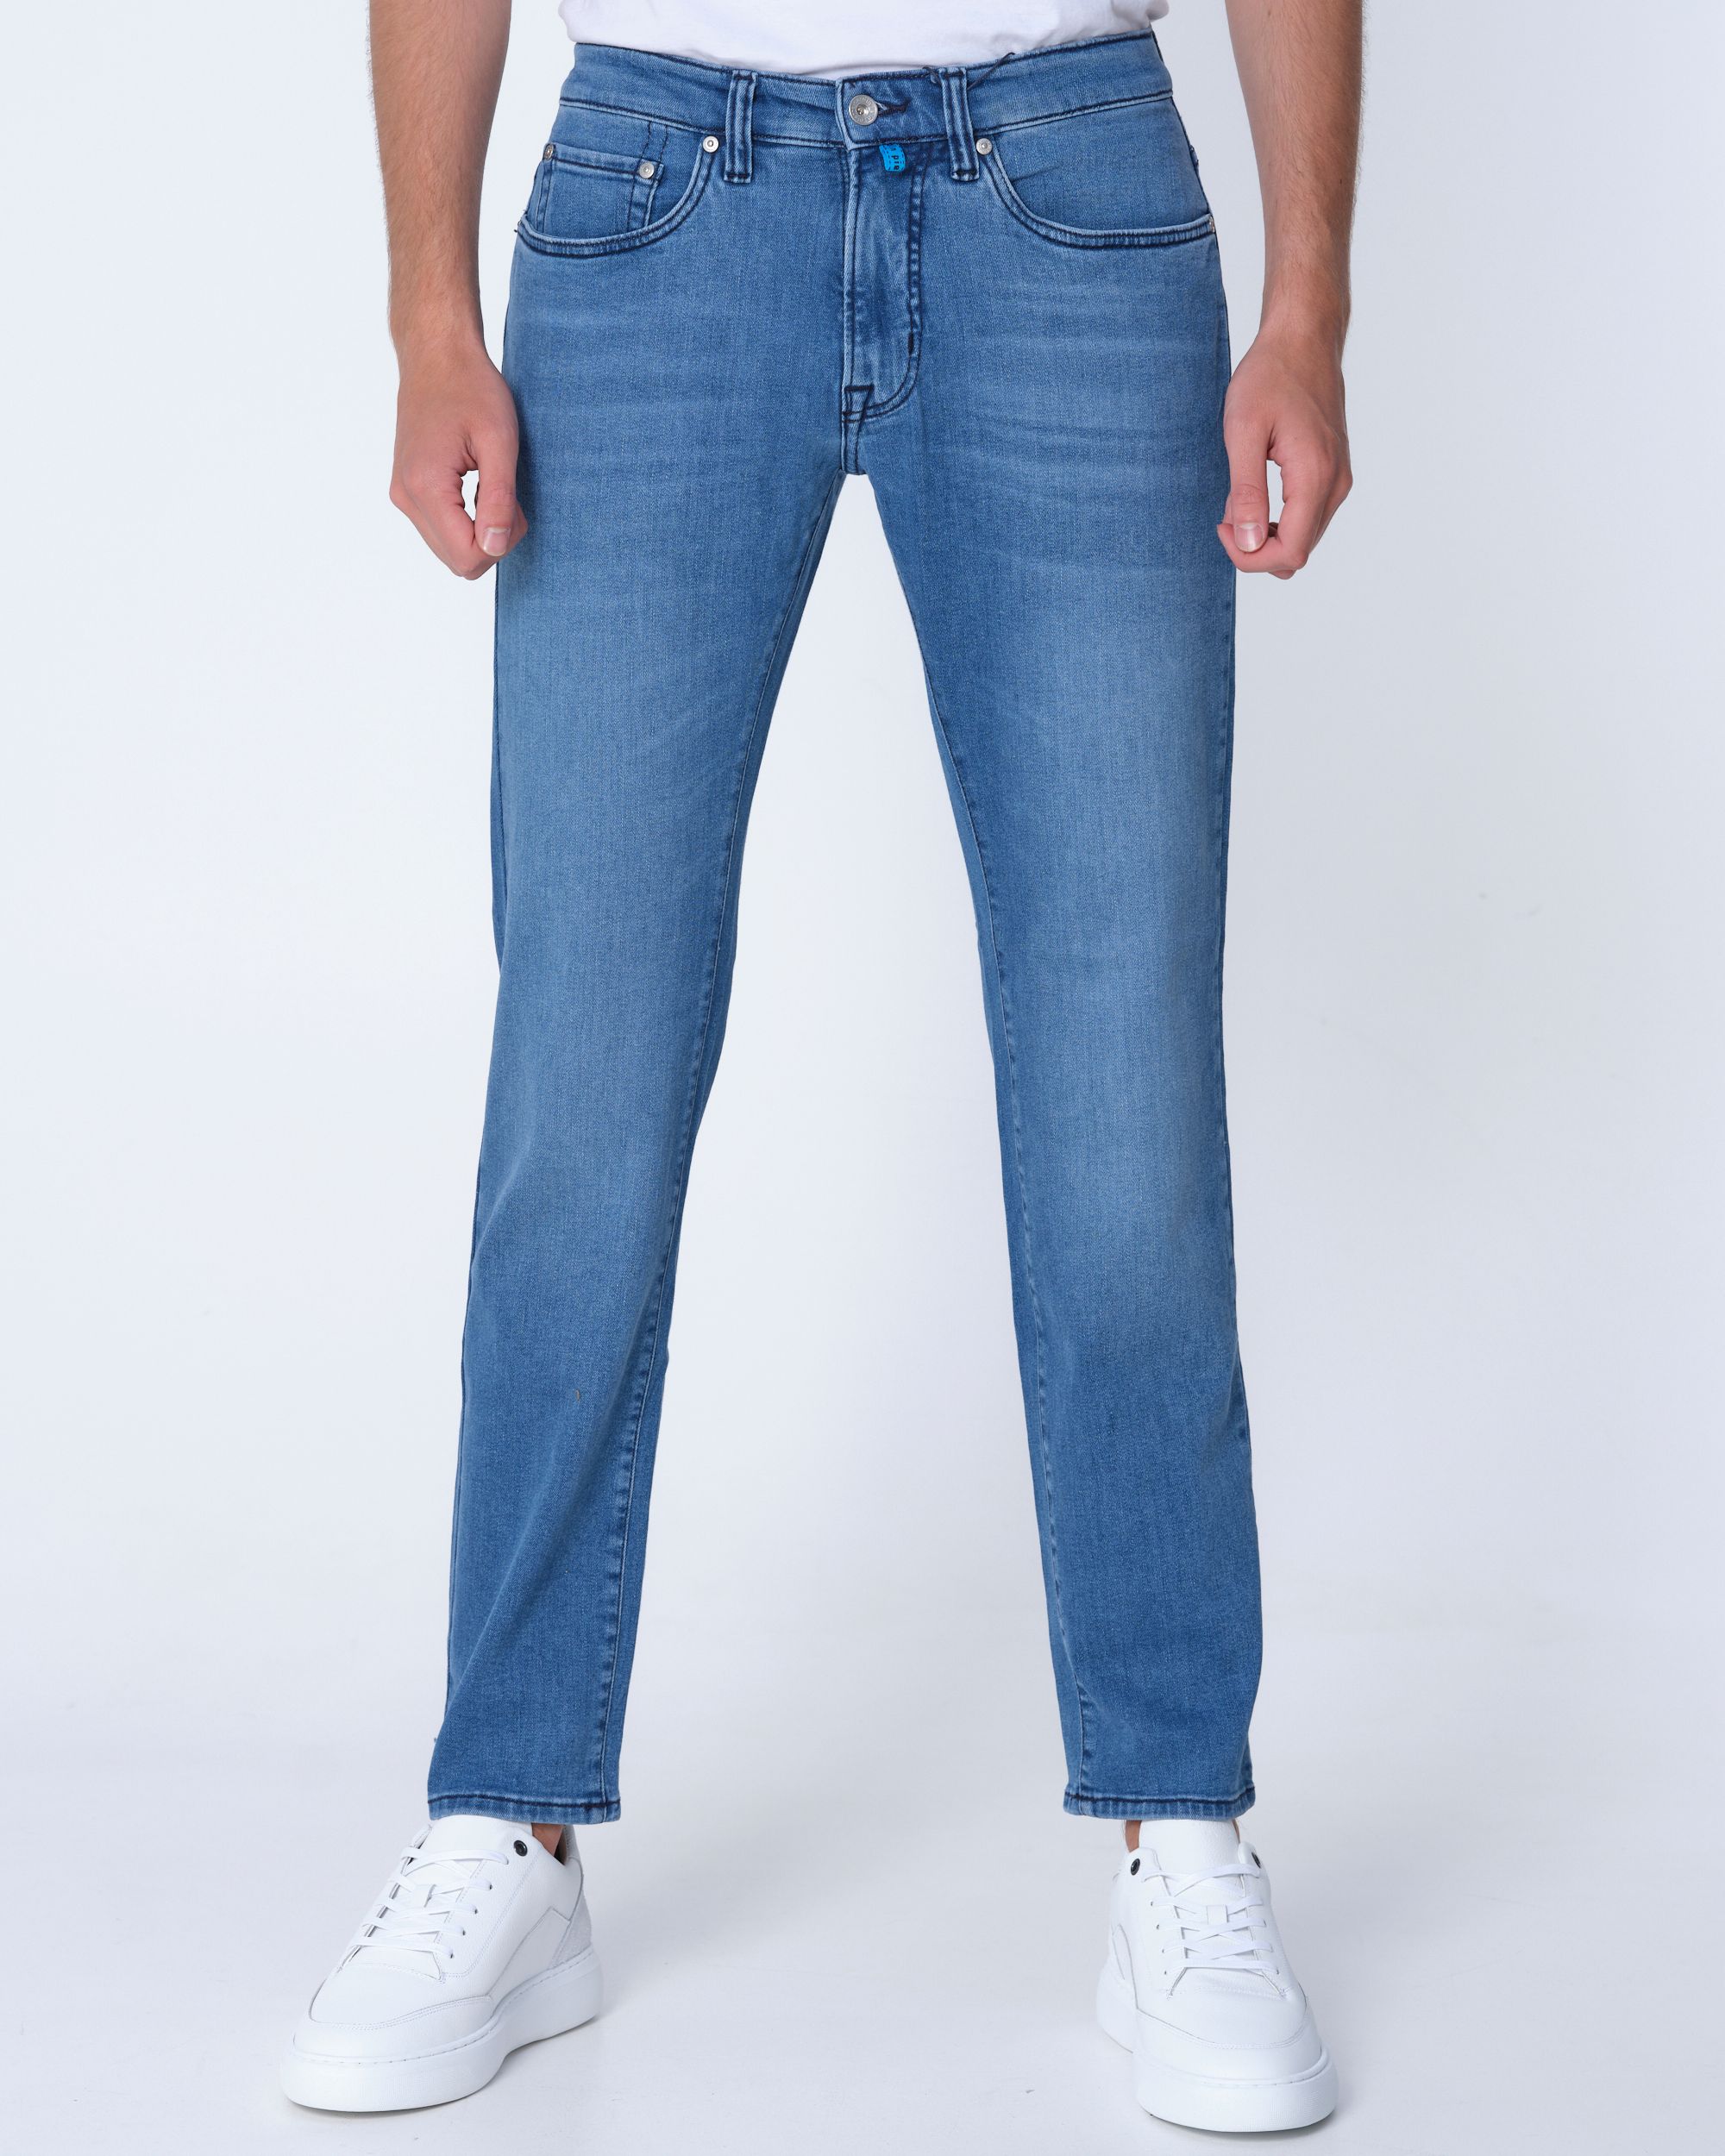 Pierre Cardin Jeans | Shop nu - Only for Men